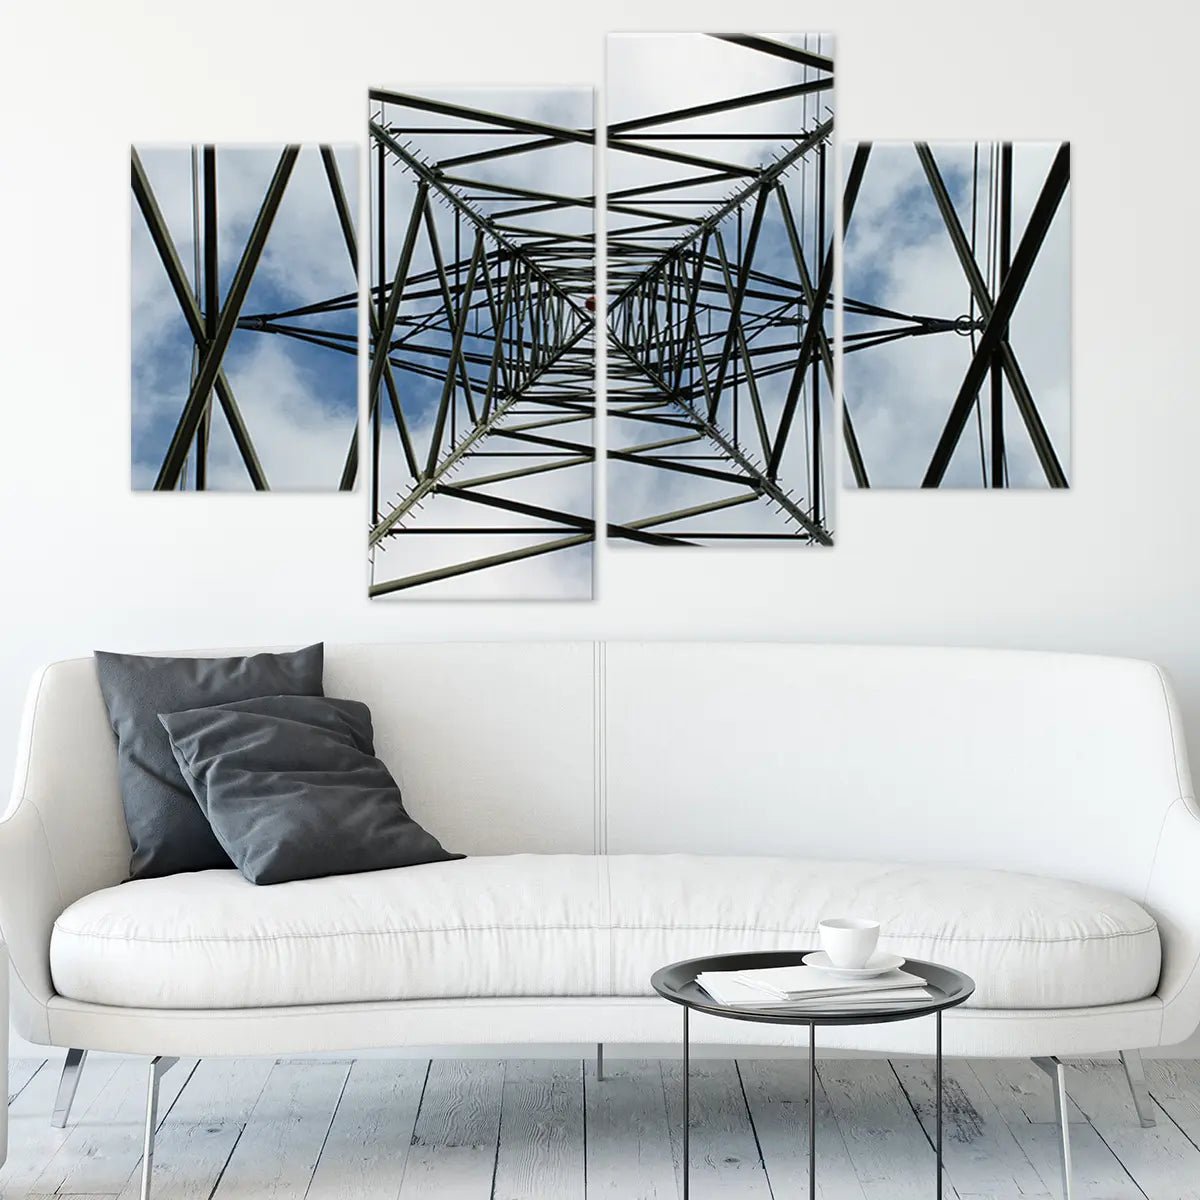 Dark Blue Luxury Geometric Wall Art Multi panel Canvas